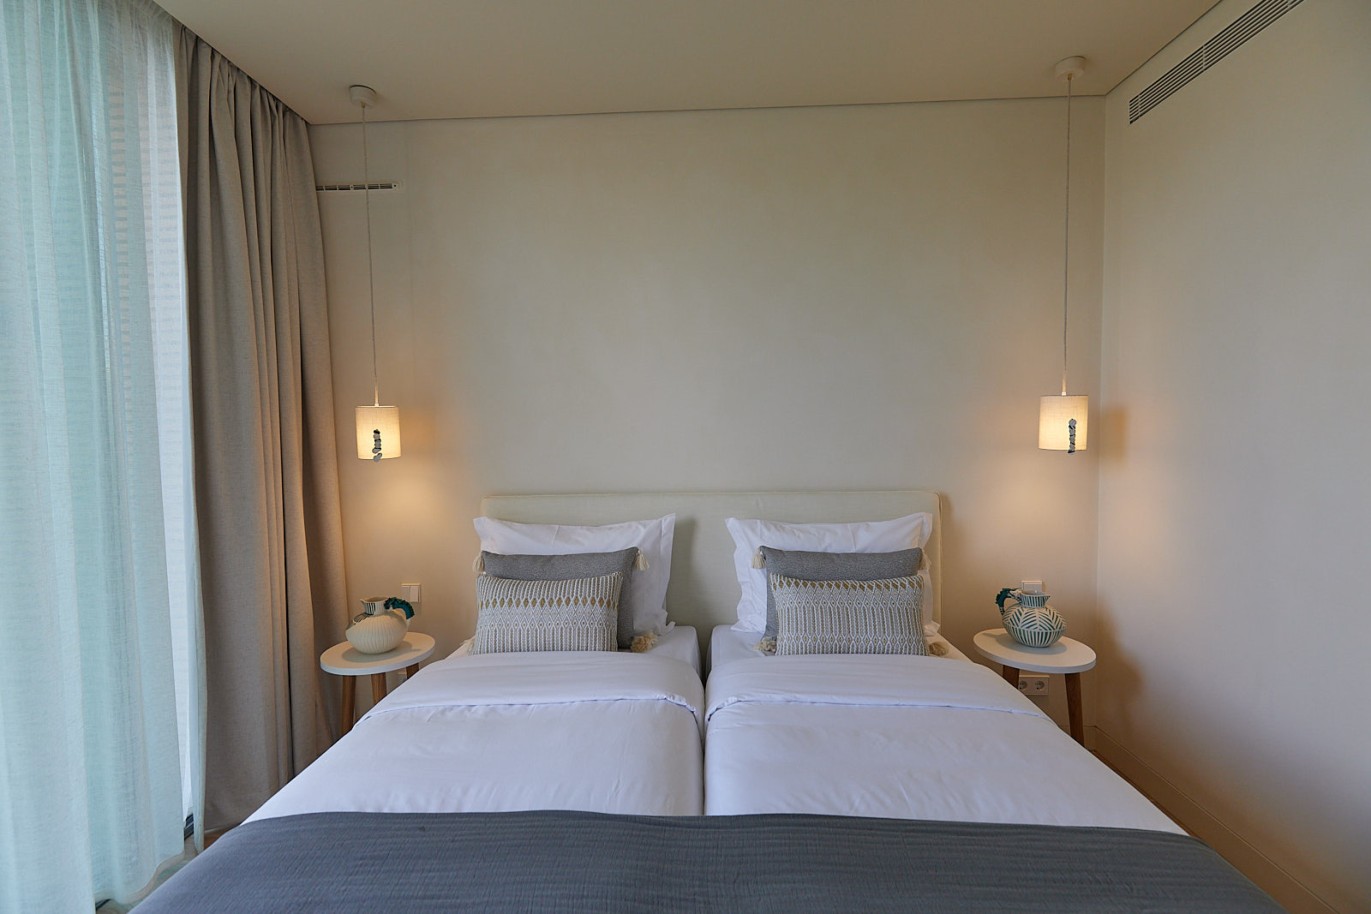 2 bedroom apartment in resort, for sale in Porches, Algarve_230640